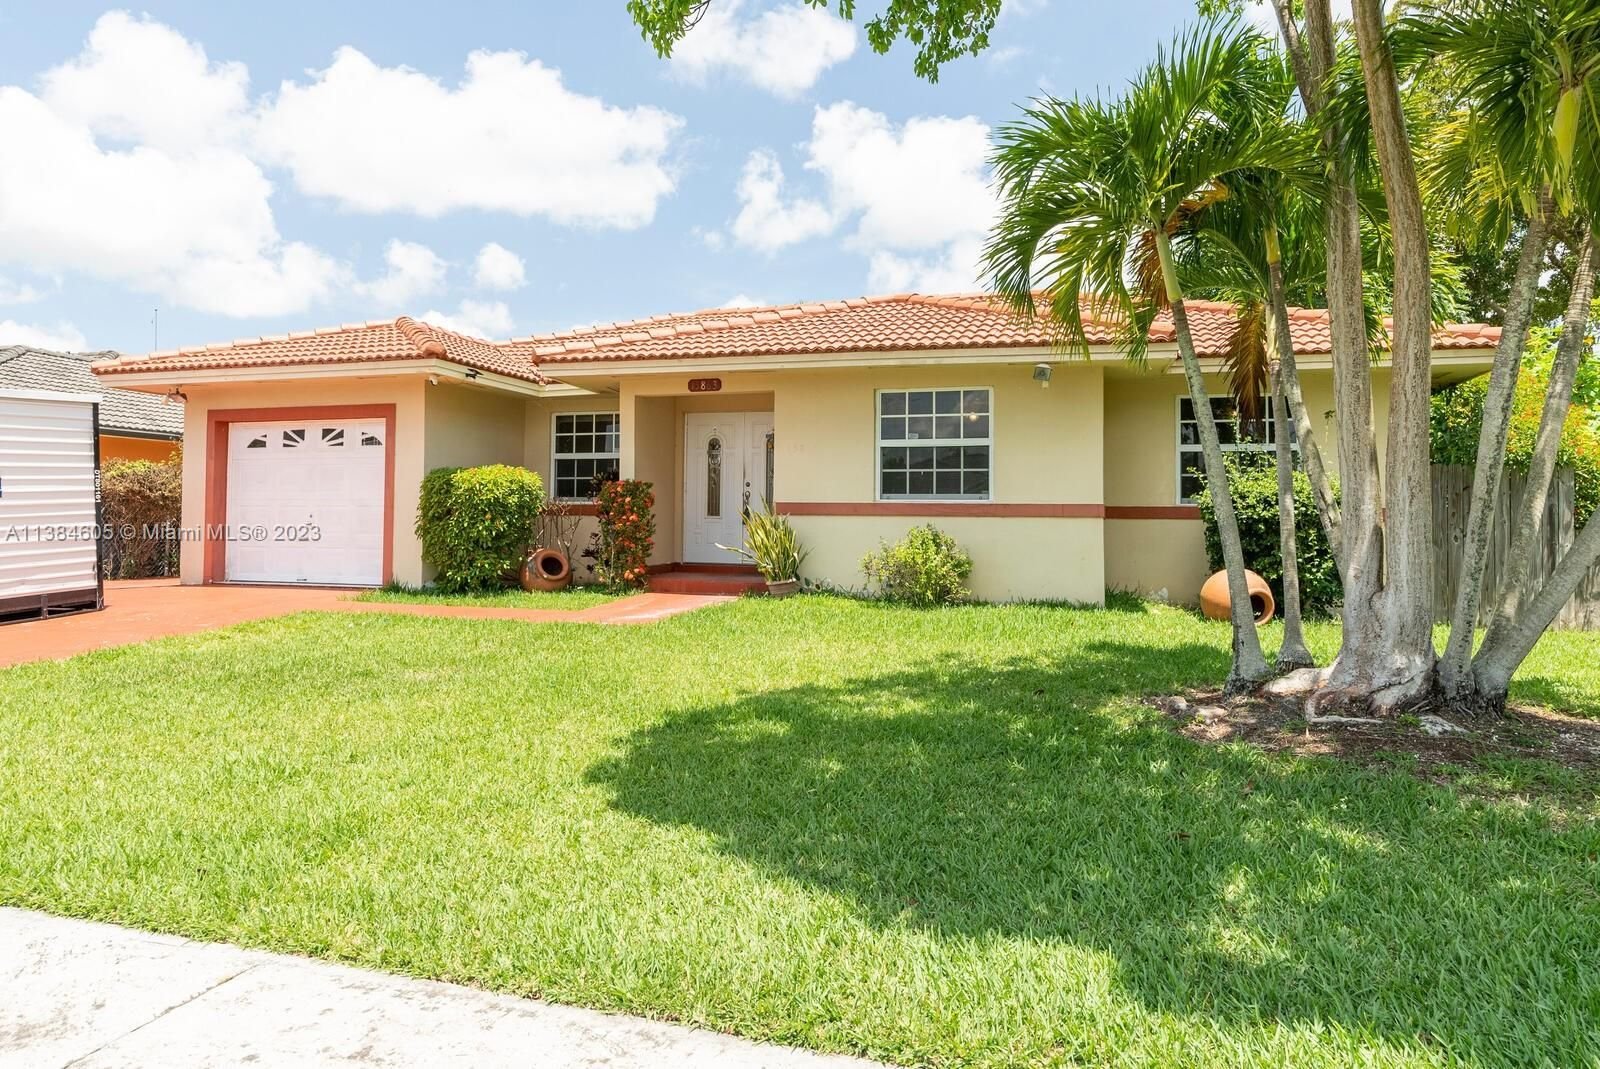 Real estate property located at 15863 145th Ct, Miami-Dade County, Miami, FL